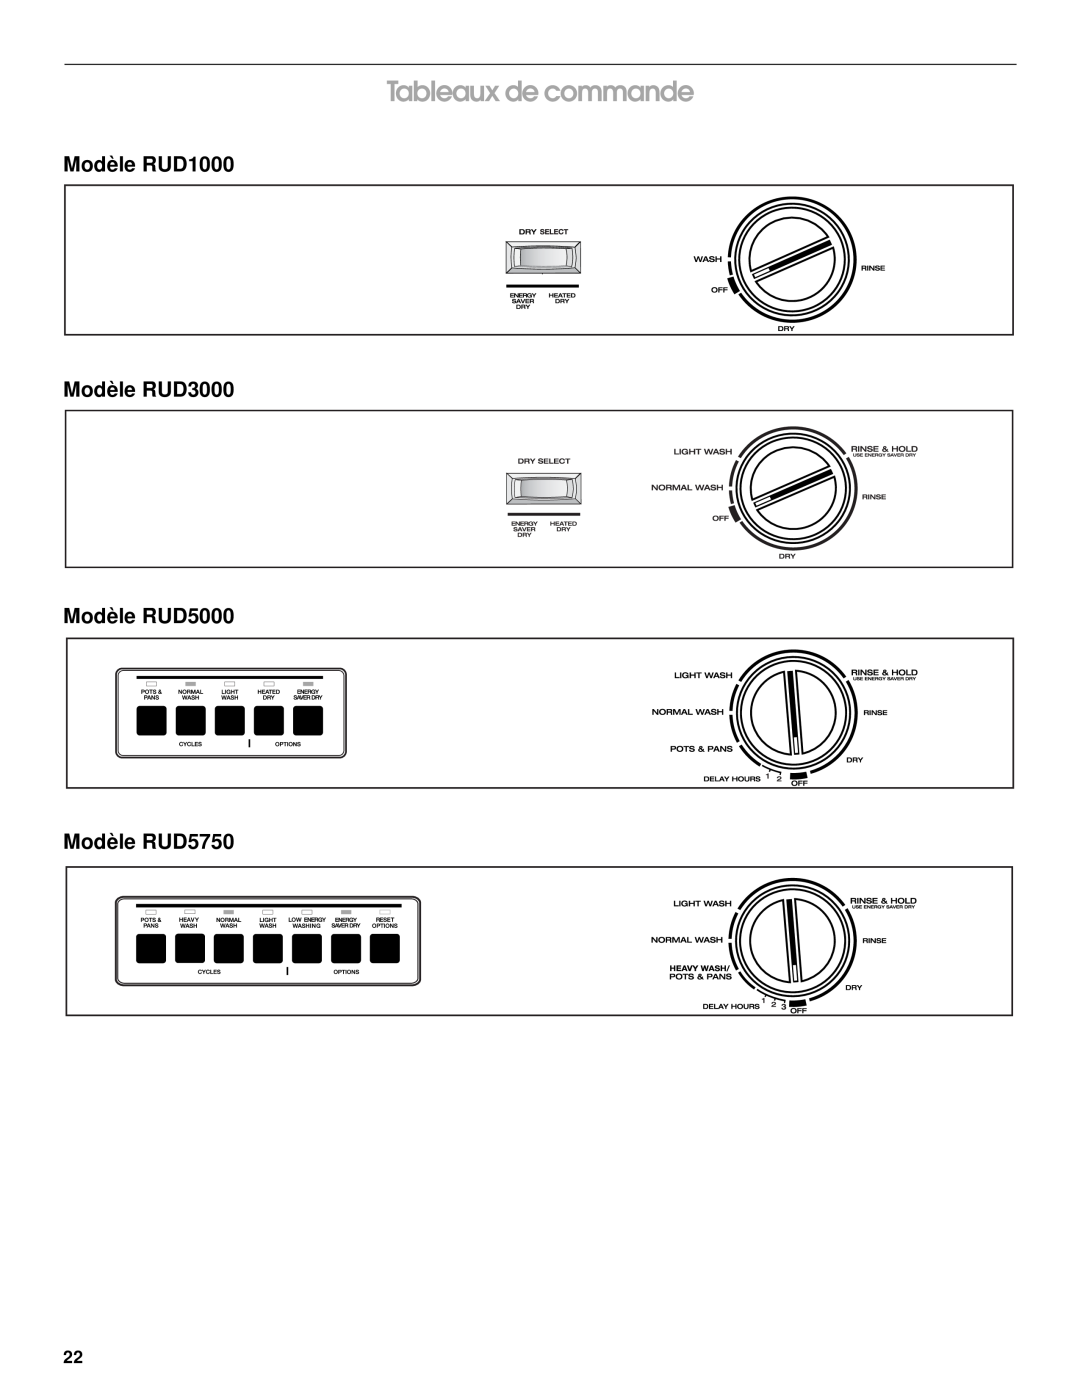 Whirlpool manual Tableaux de commande, Modèle RUD1000 Modèle RUD3000 Modèle RUD5000 Modèle RUD5750 